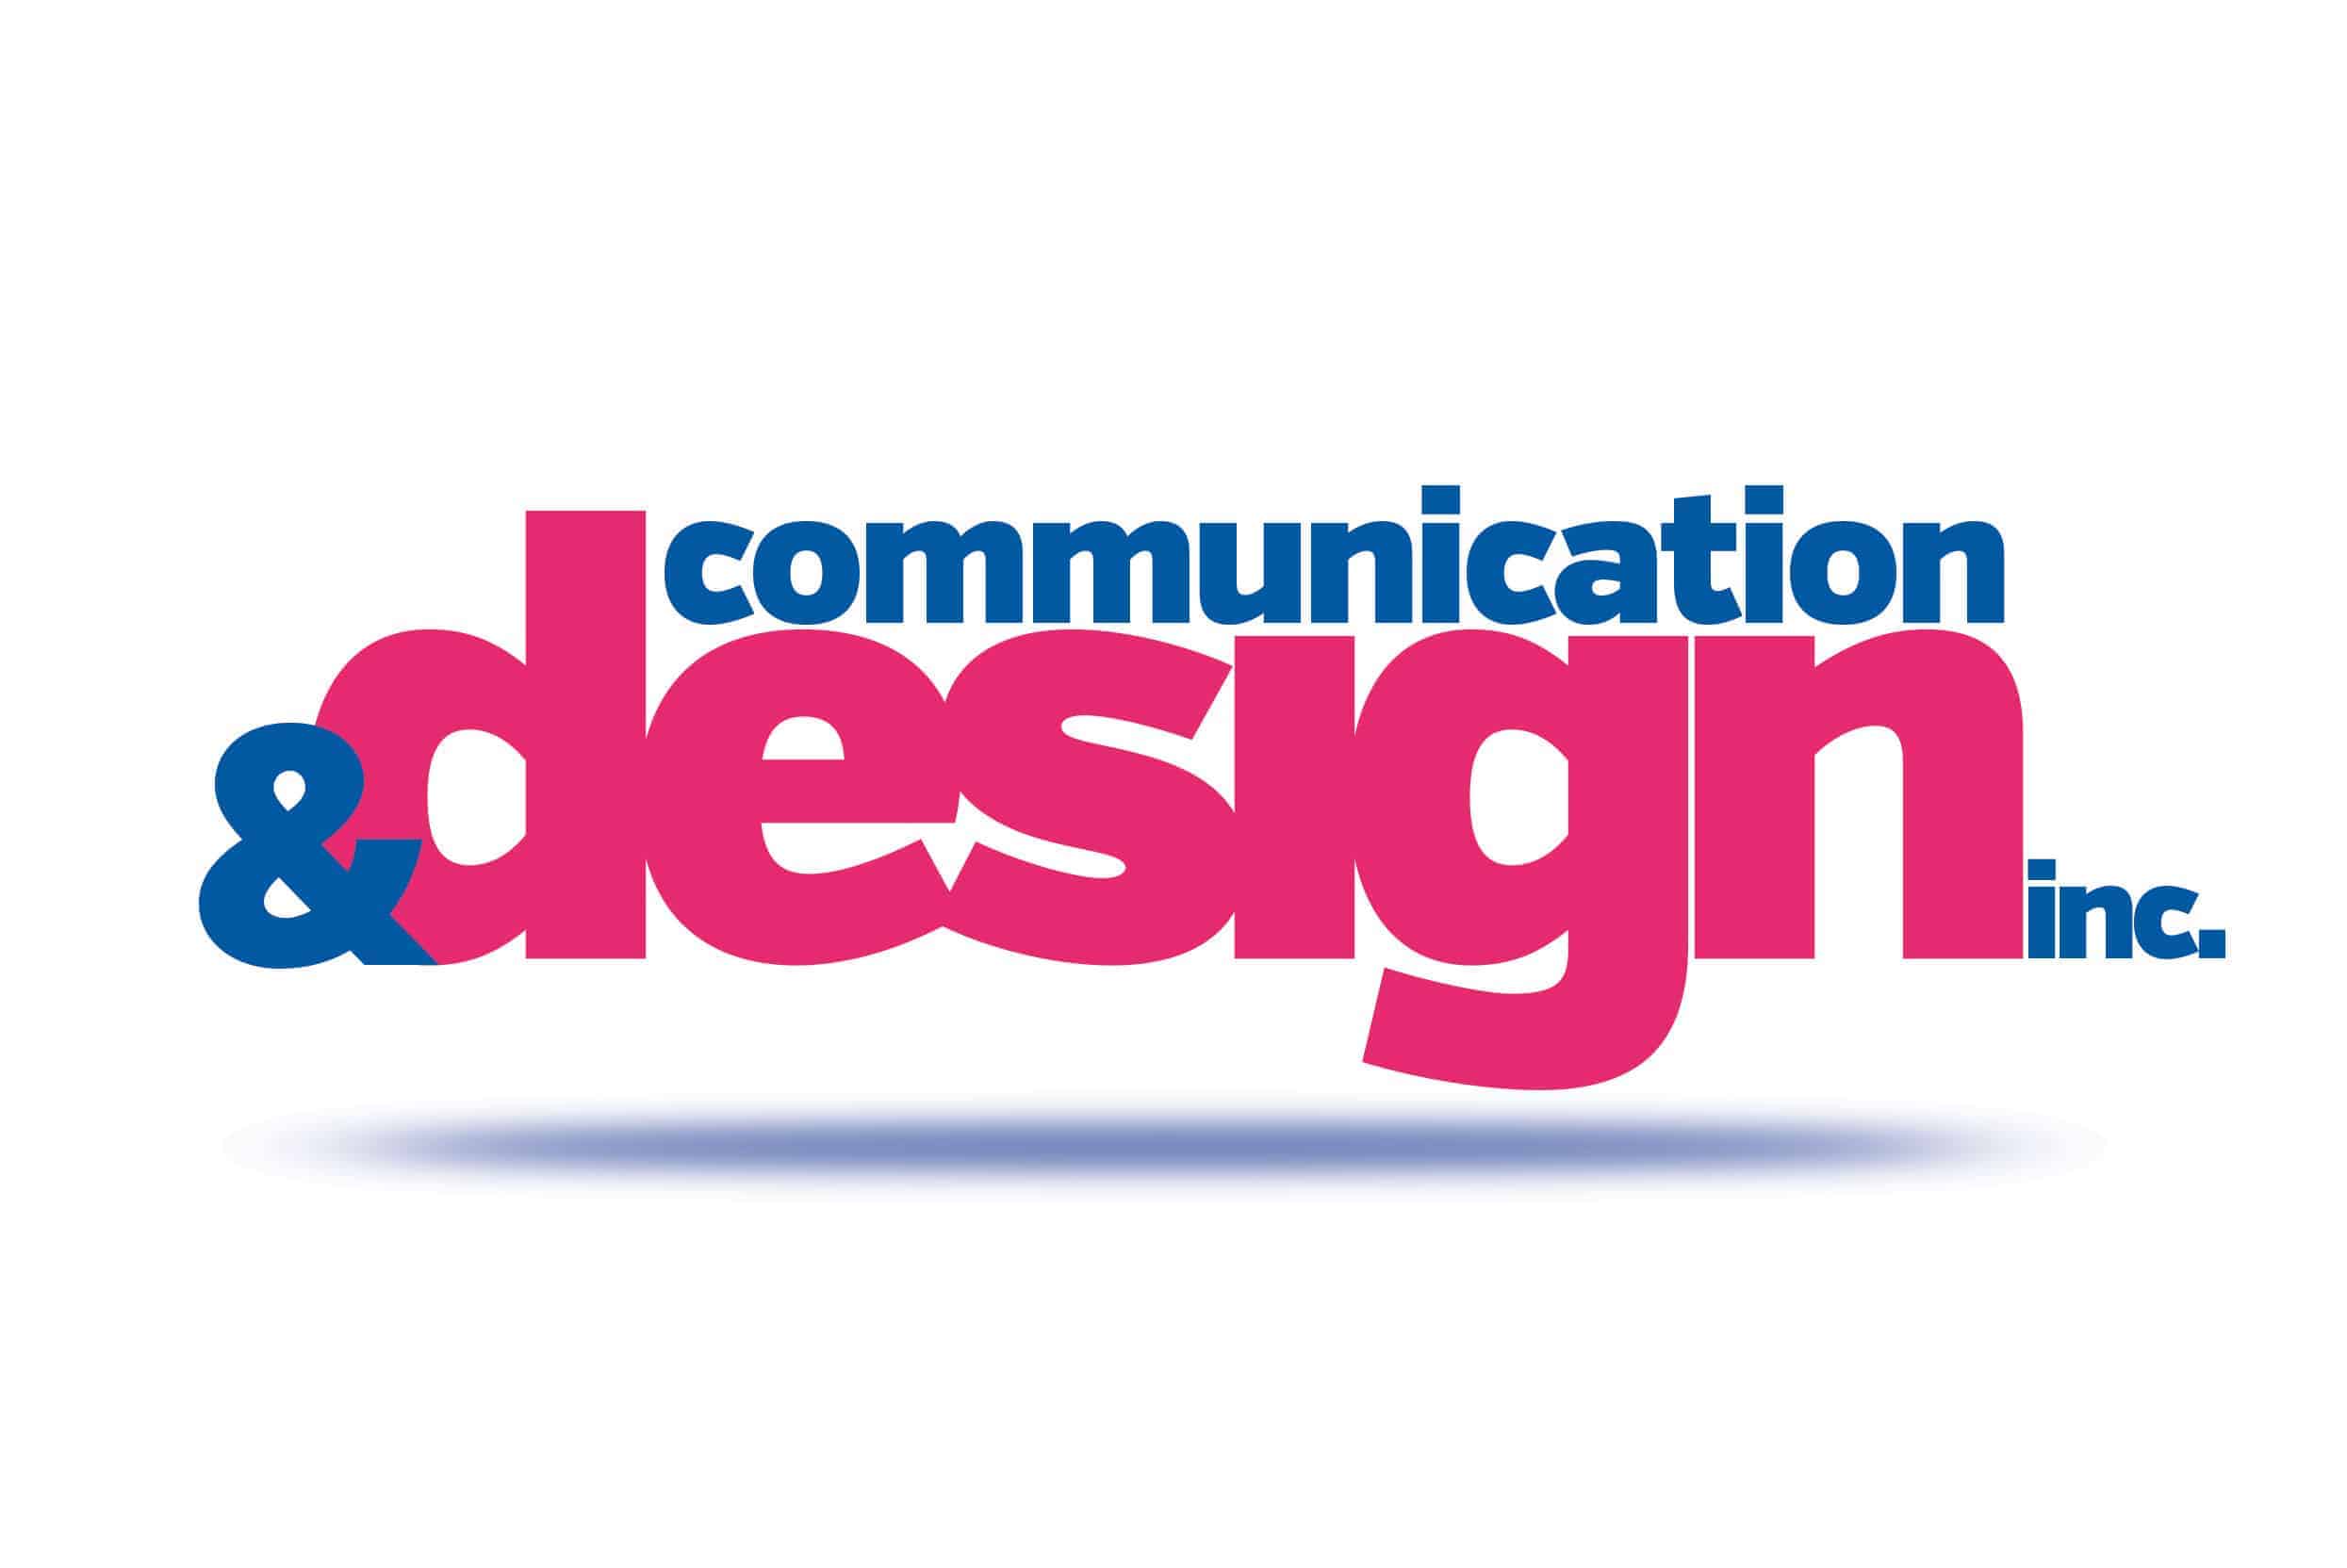 Communication & Design Inc